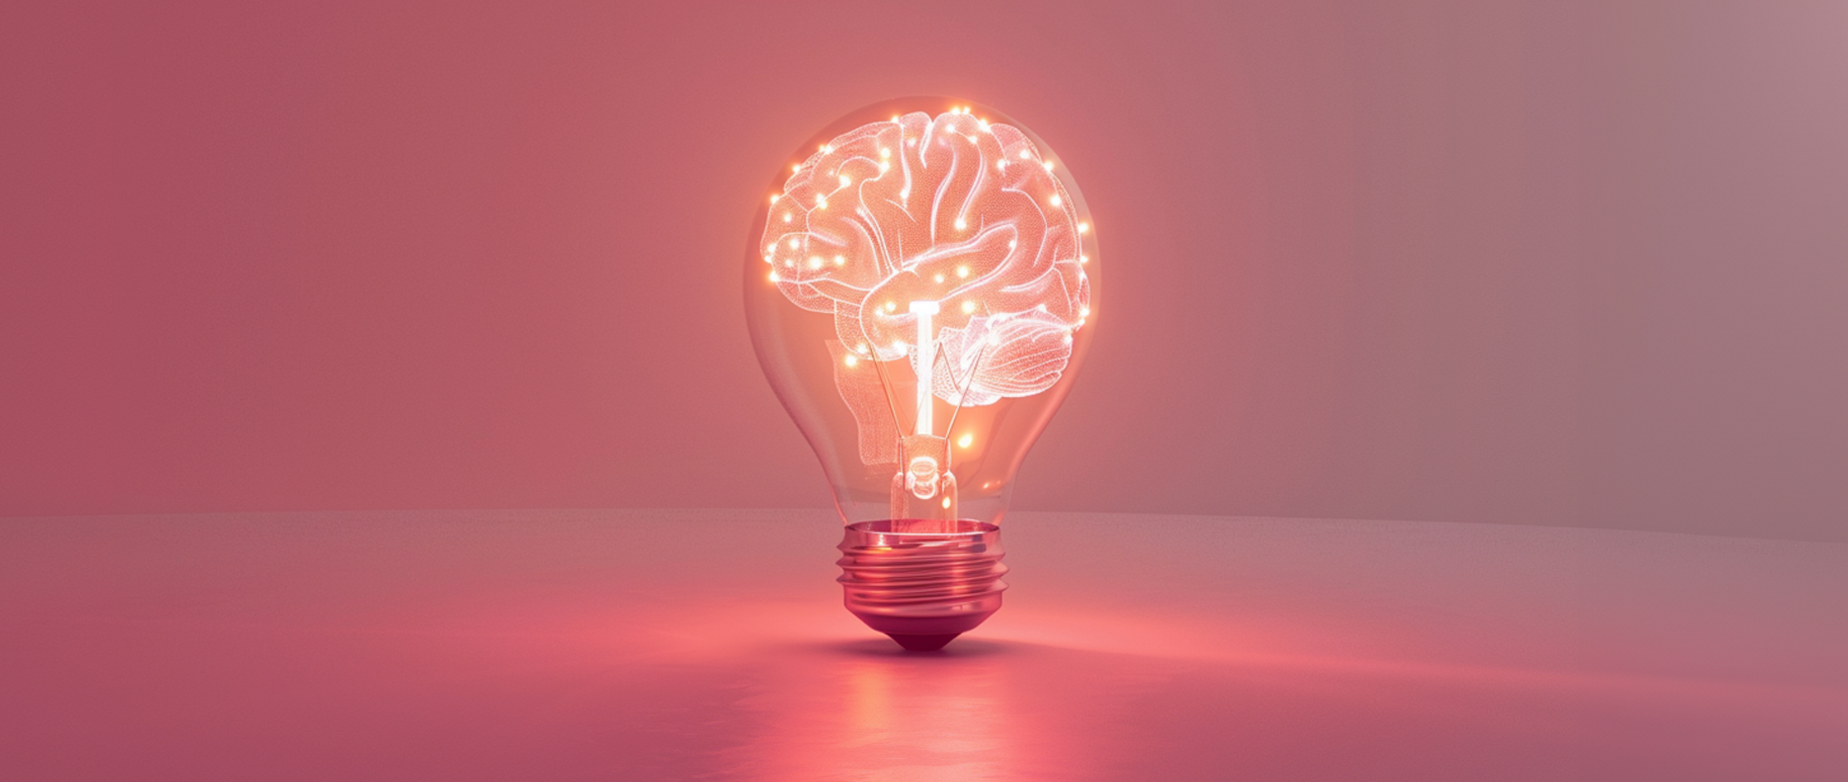 An illuminated lightbulb with a brain inside on a dark pink background.